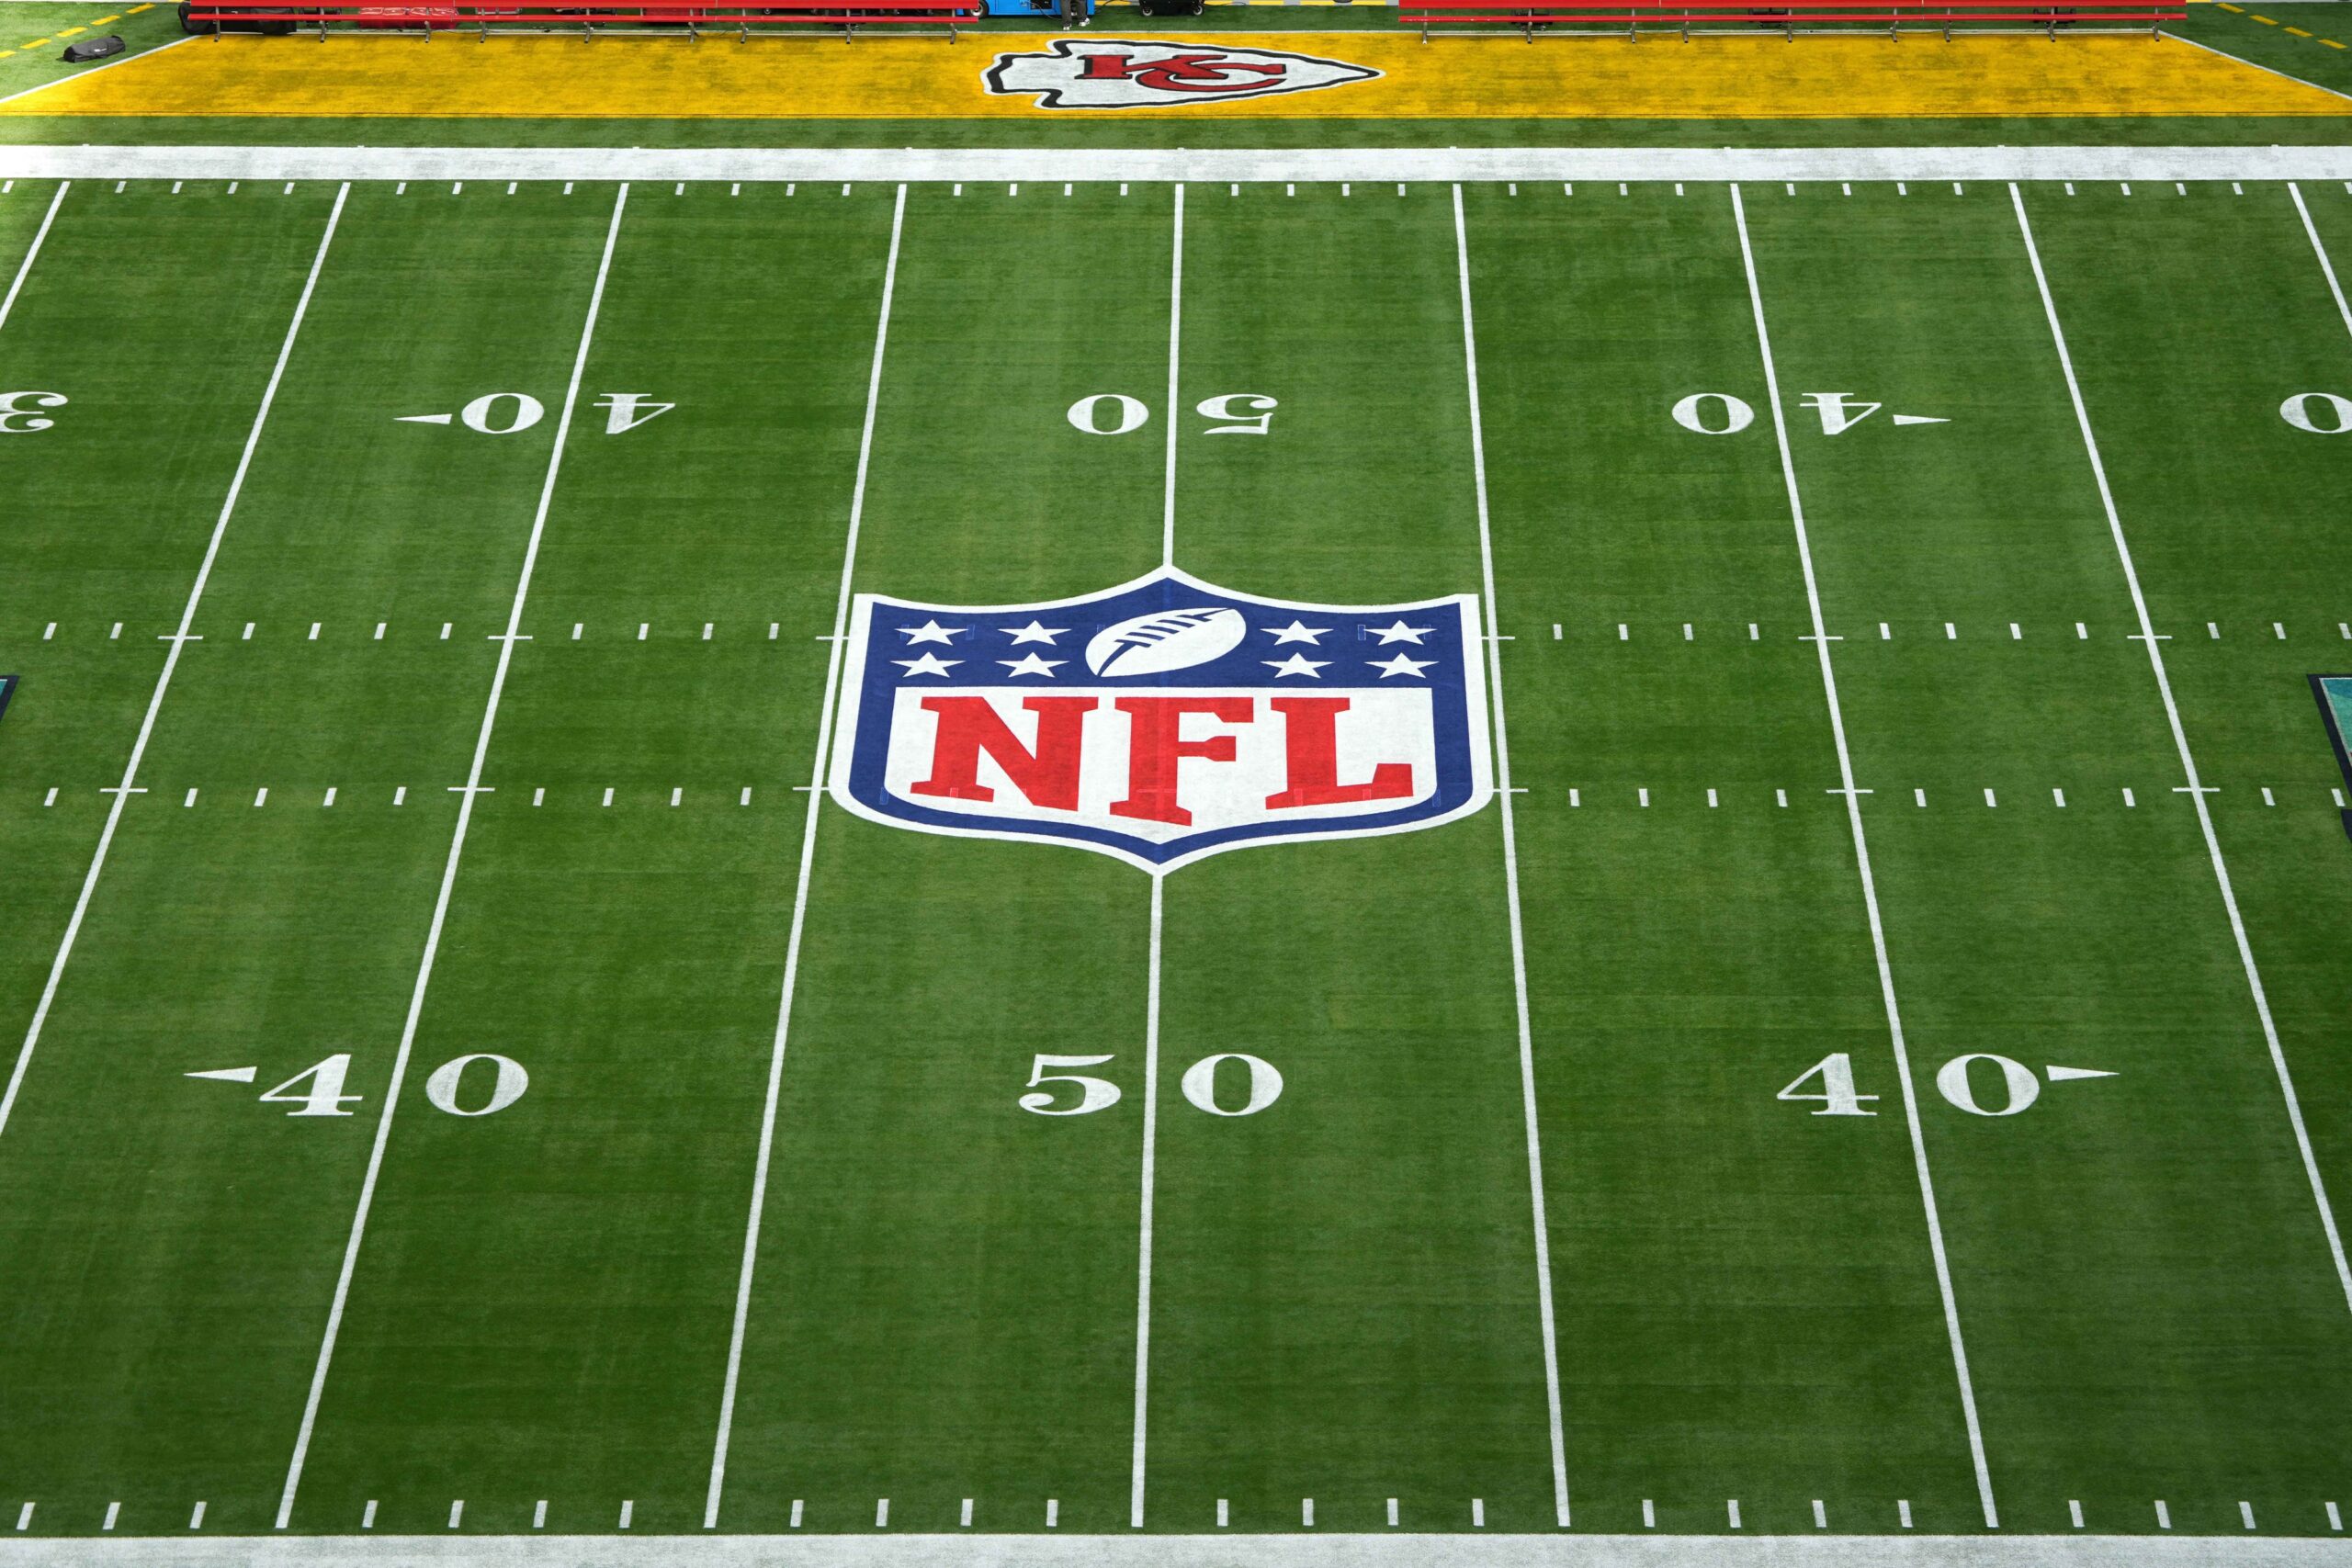 Falcons vs Cowboys NFL live stream reddit for Week 2